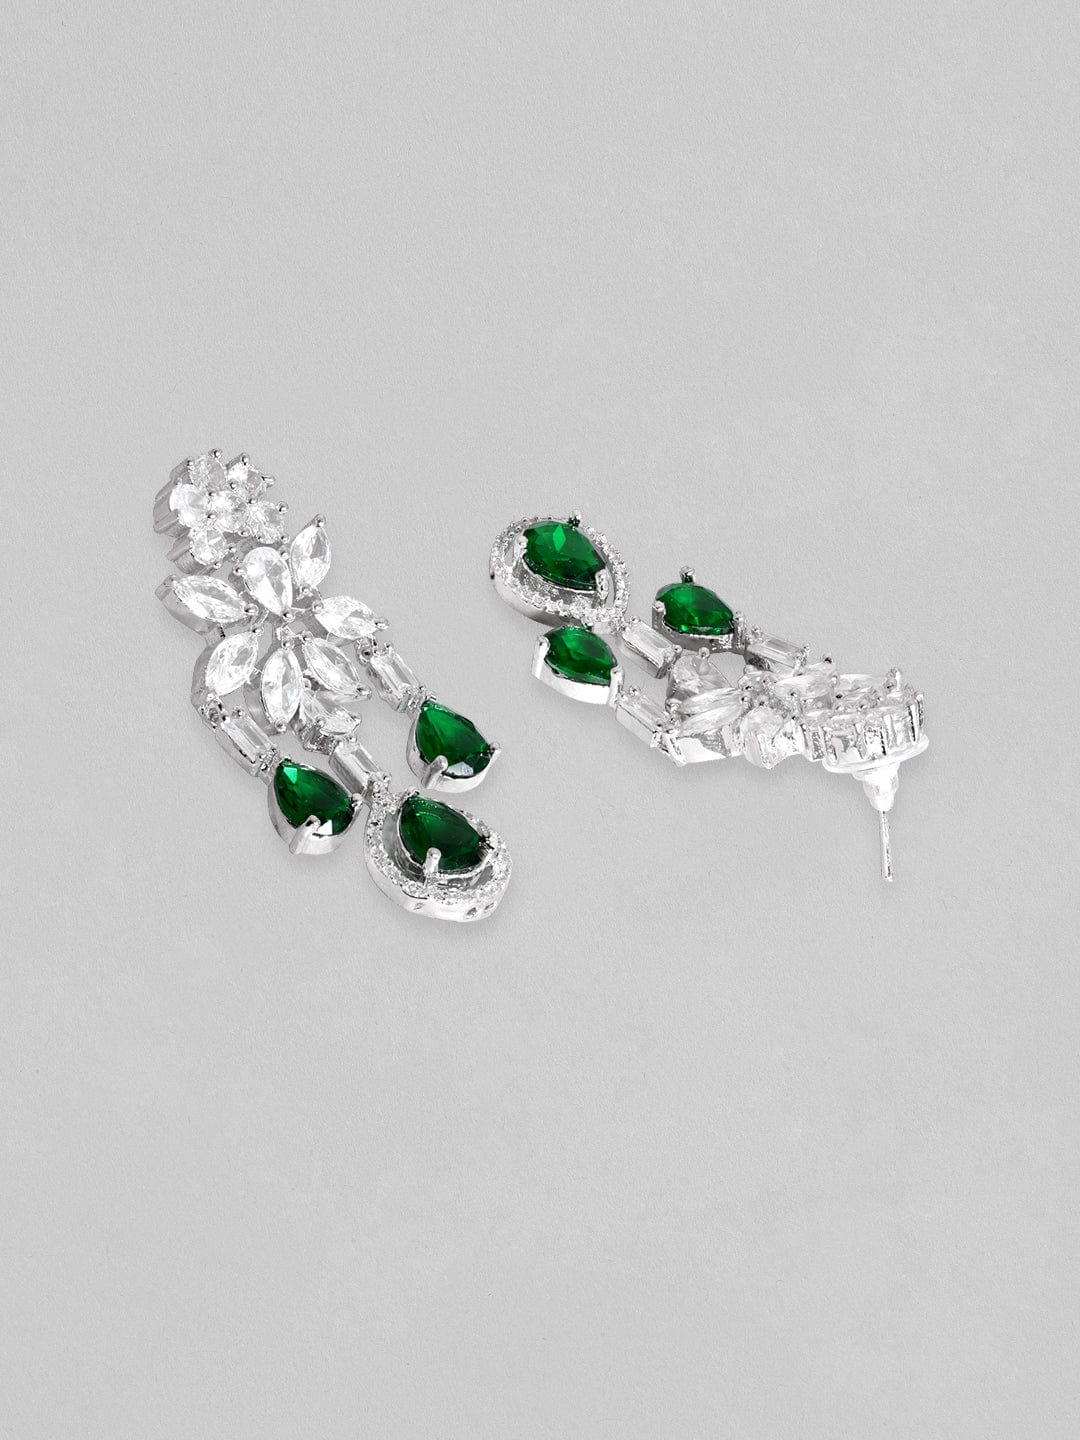 Rhodium Plated Emerlad Green Oval Zirconia Tassel Drop Silver Necklace Set. Jewellery Sets